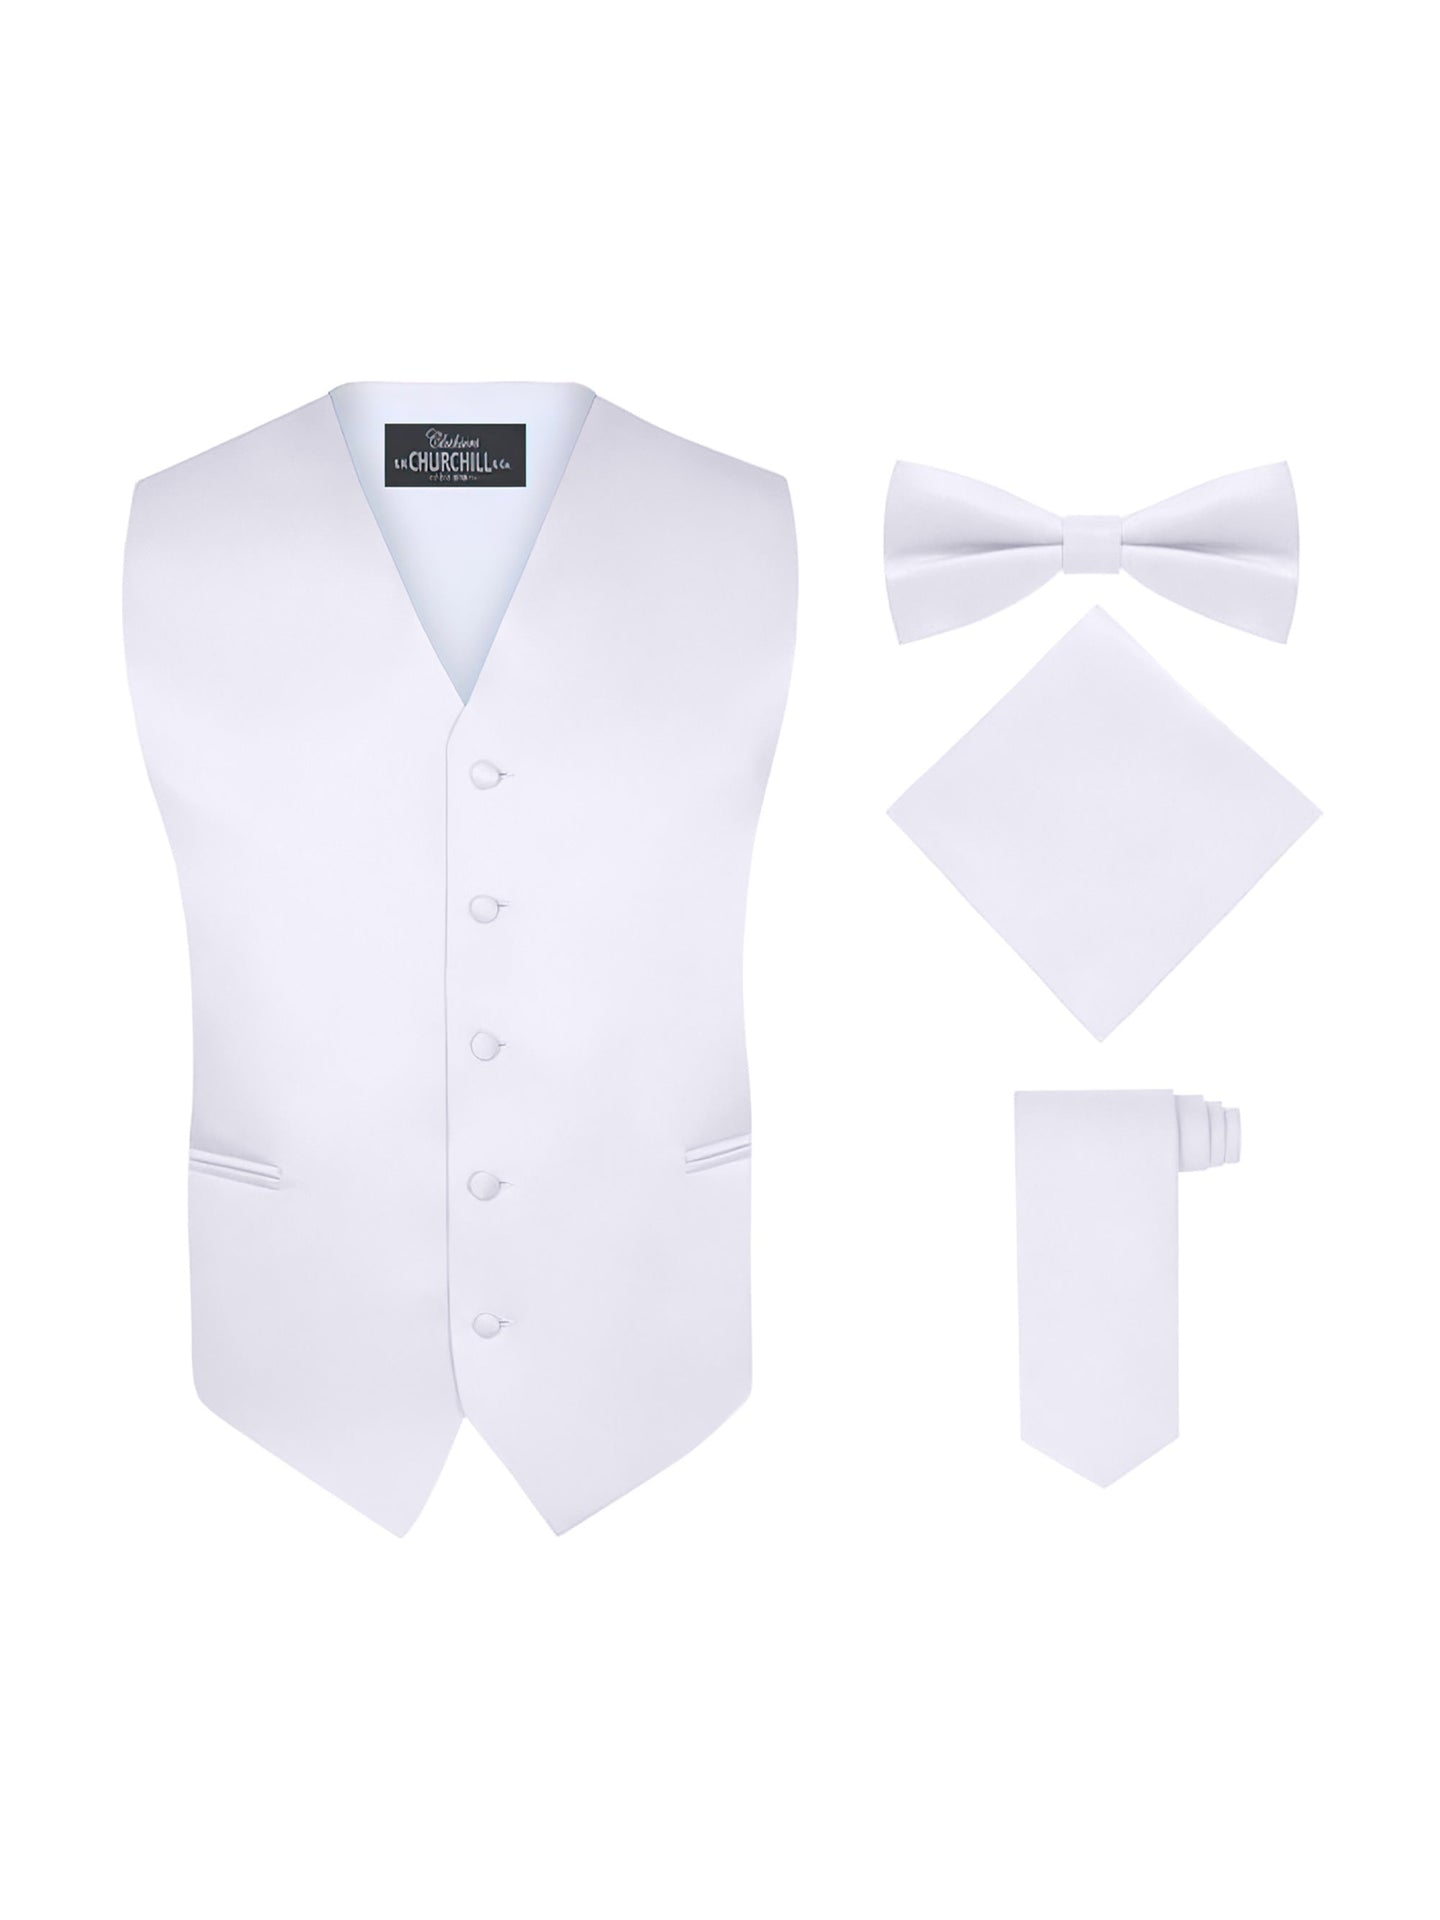 S.H. Churchill & Co. Men's 4 Piece White Vest Set, with Bow Tie, Neck Tie & Pocket Hankie